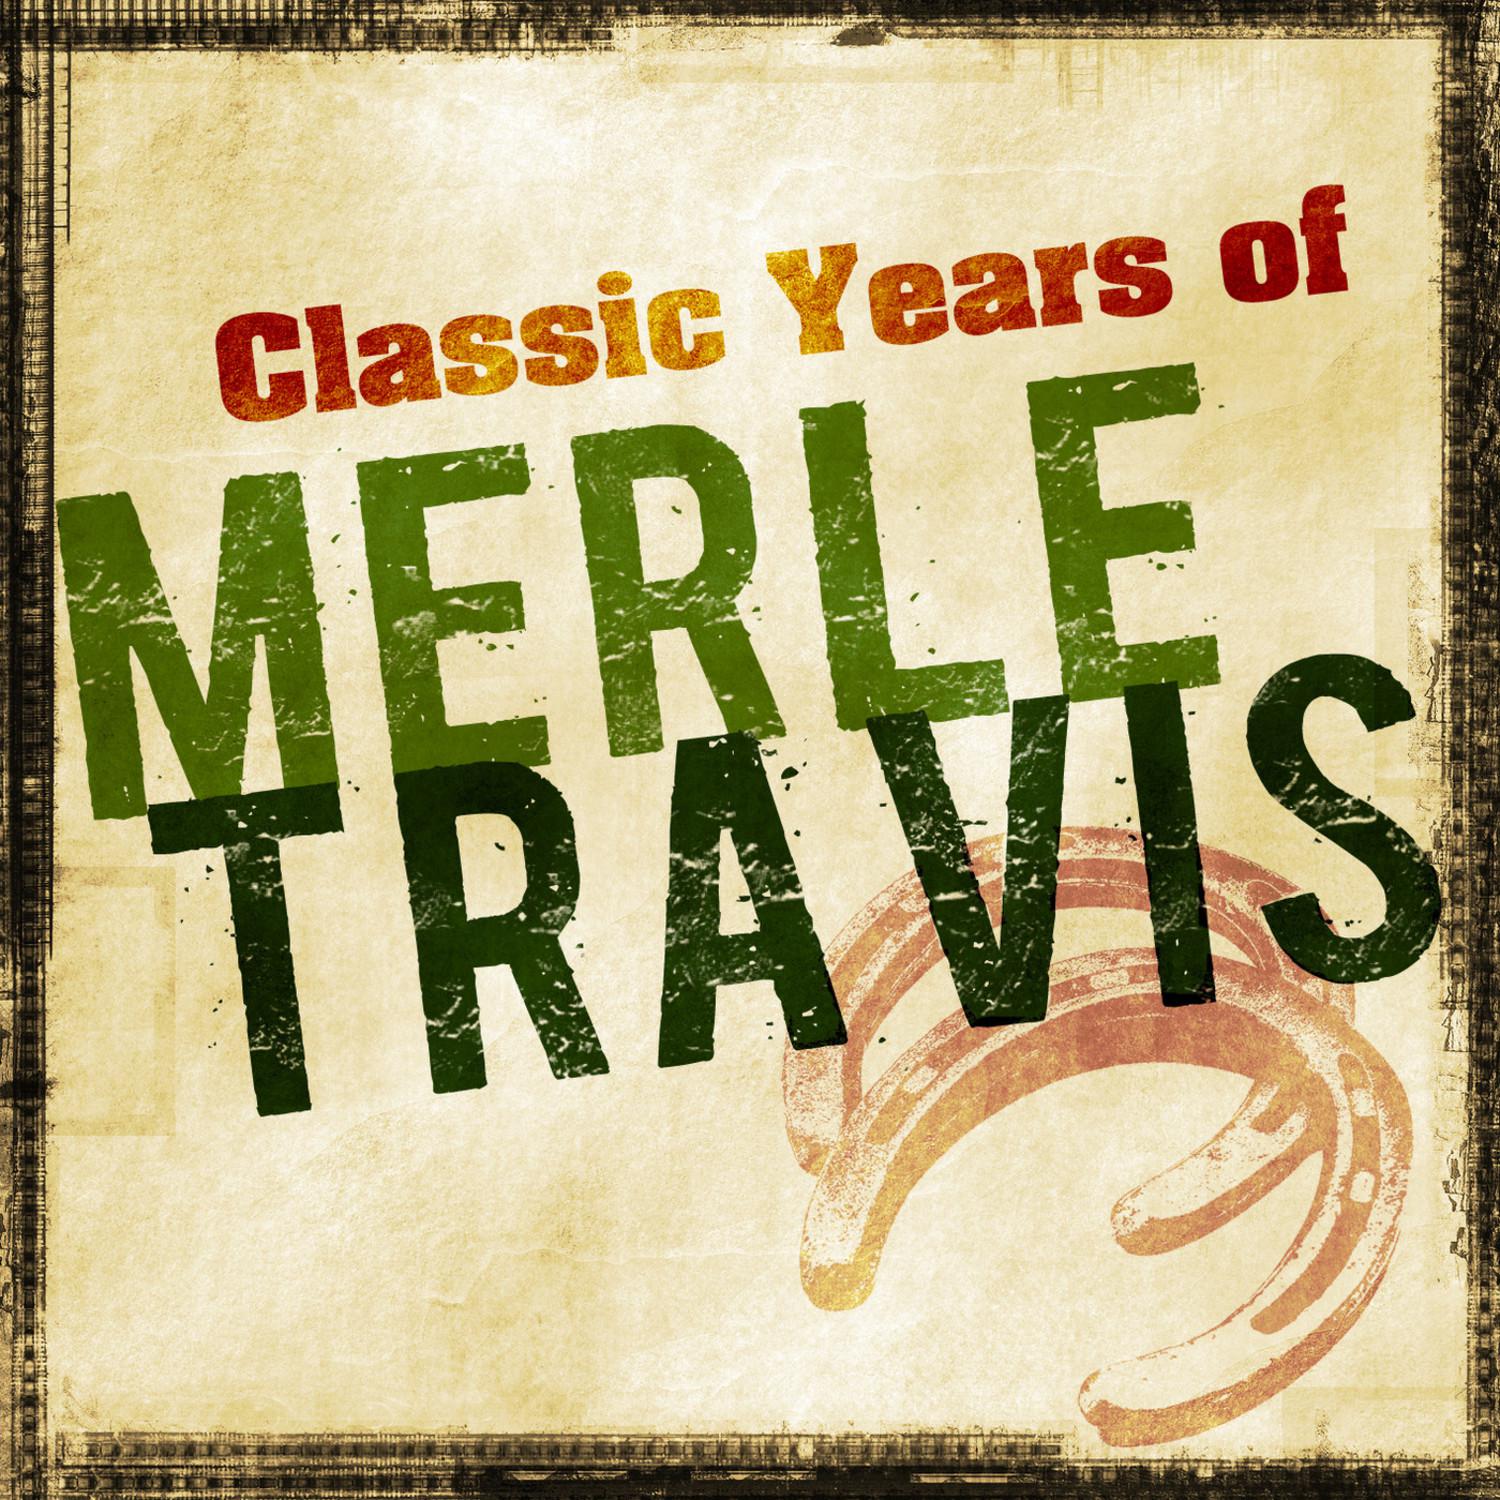 Classic Years of Merle Travis